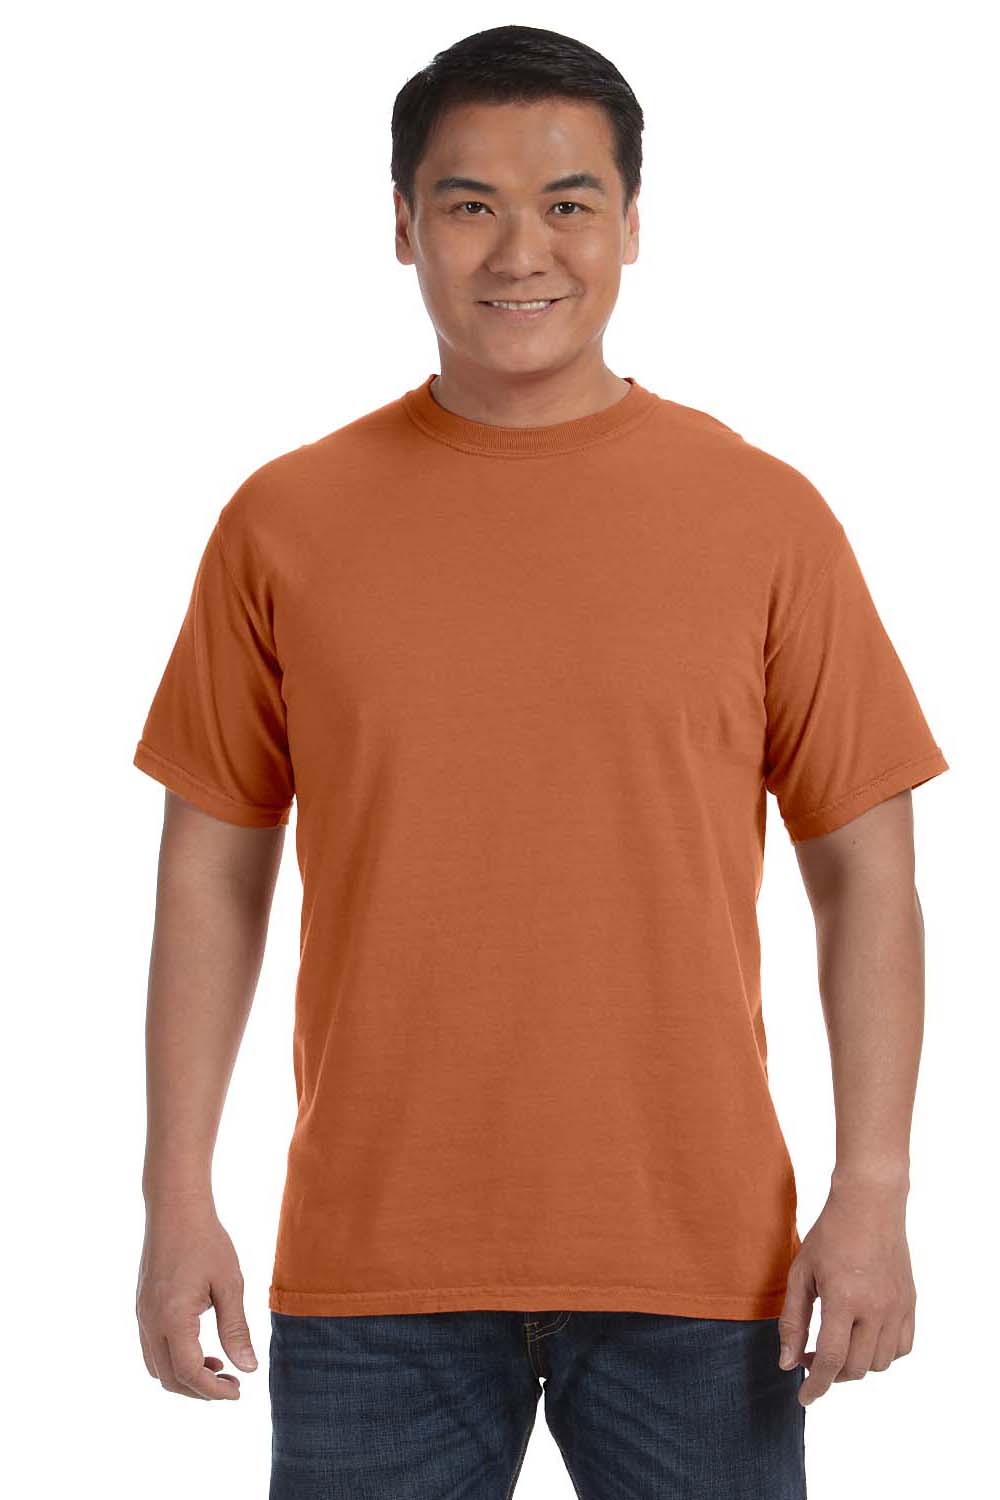 Comfort Colors C1717 Mens Short Sleeve Crewneck T-Shirt Yam Orange Front